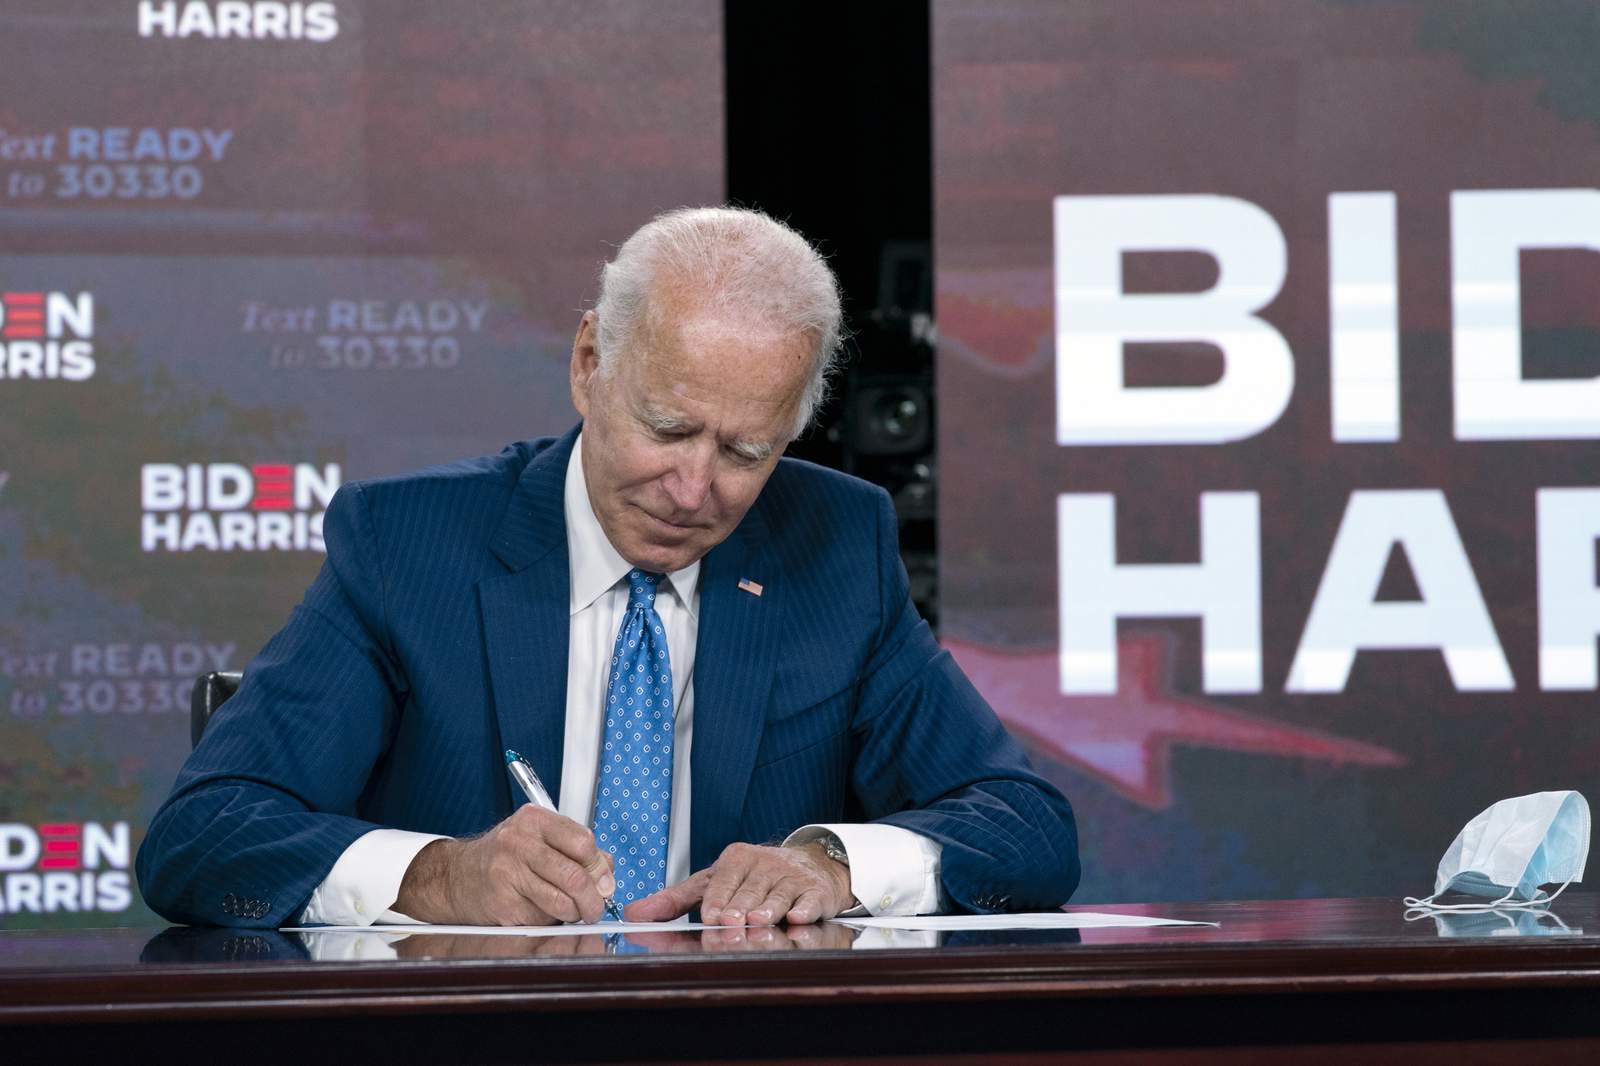 Major US postal workers union endorses Biden for president